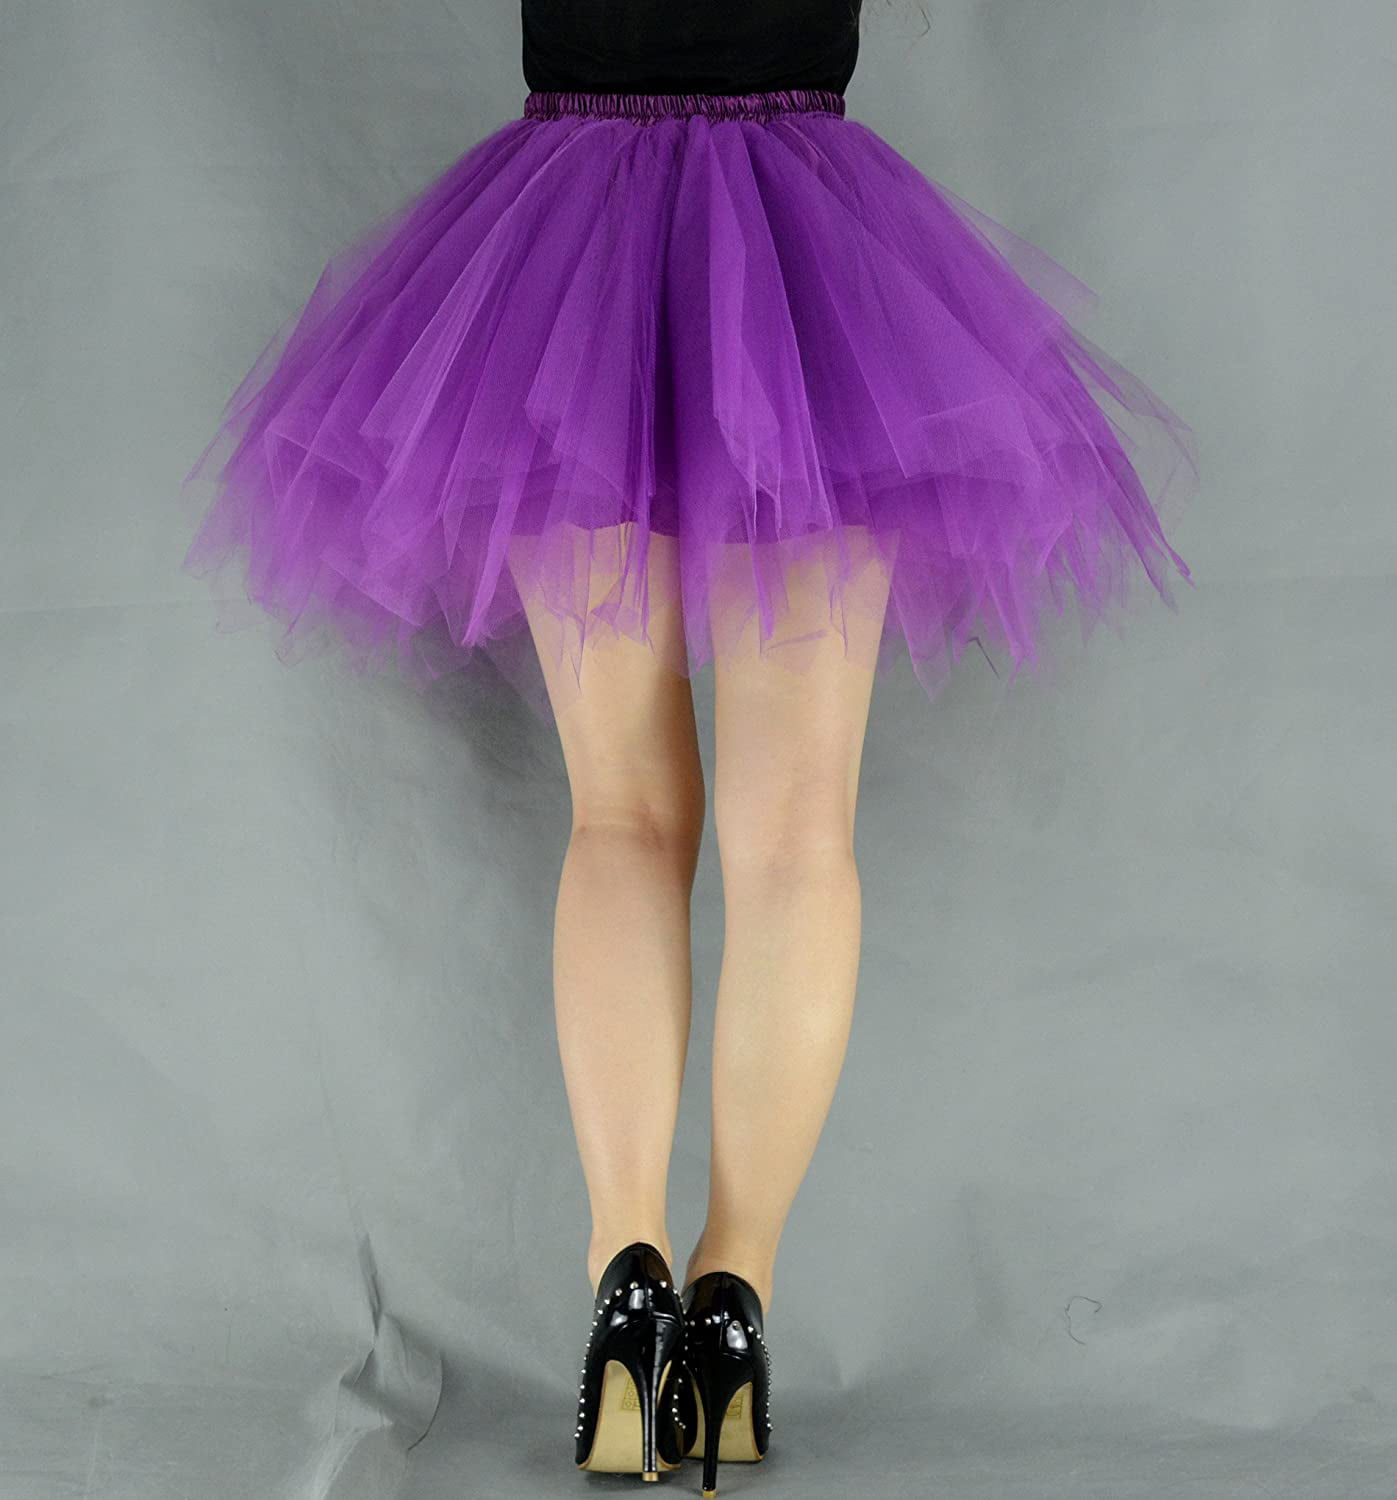 YSJERA Women's Adult Tutu Tulle Mini A-Line Petticoat Prom Party Skirt Cosplay Casual Fun Skirts 